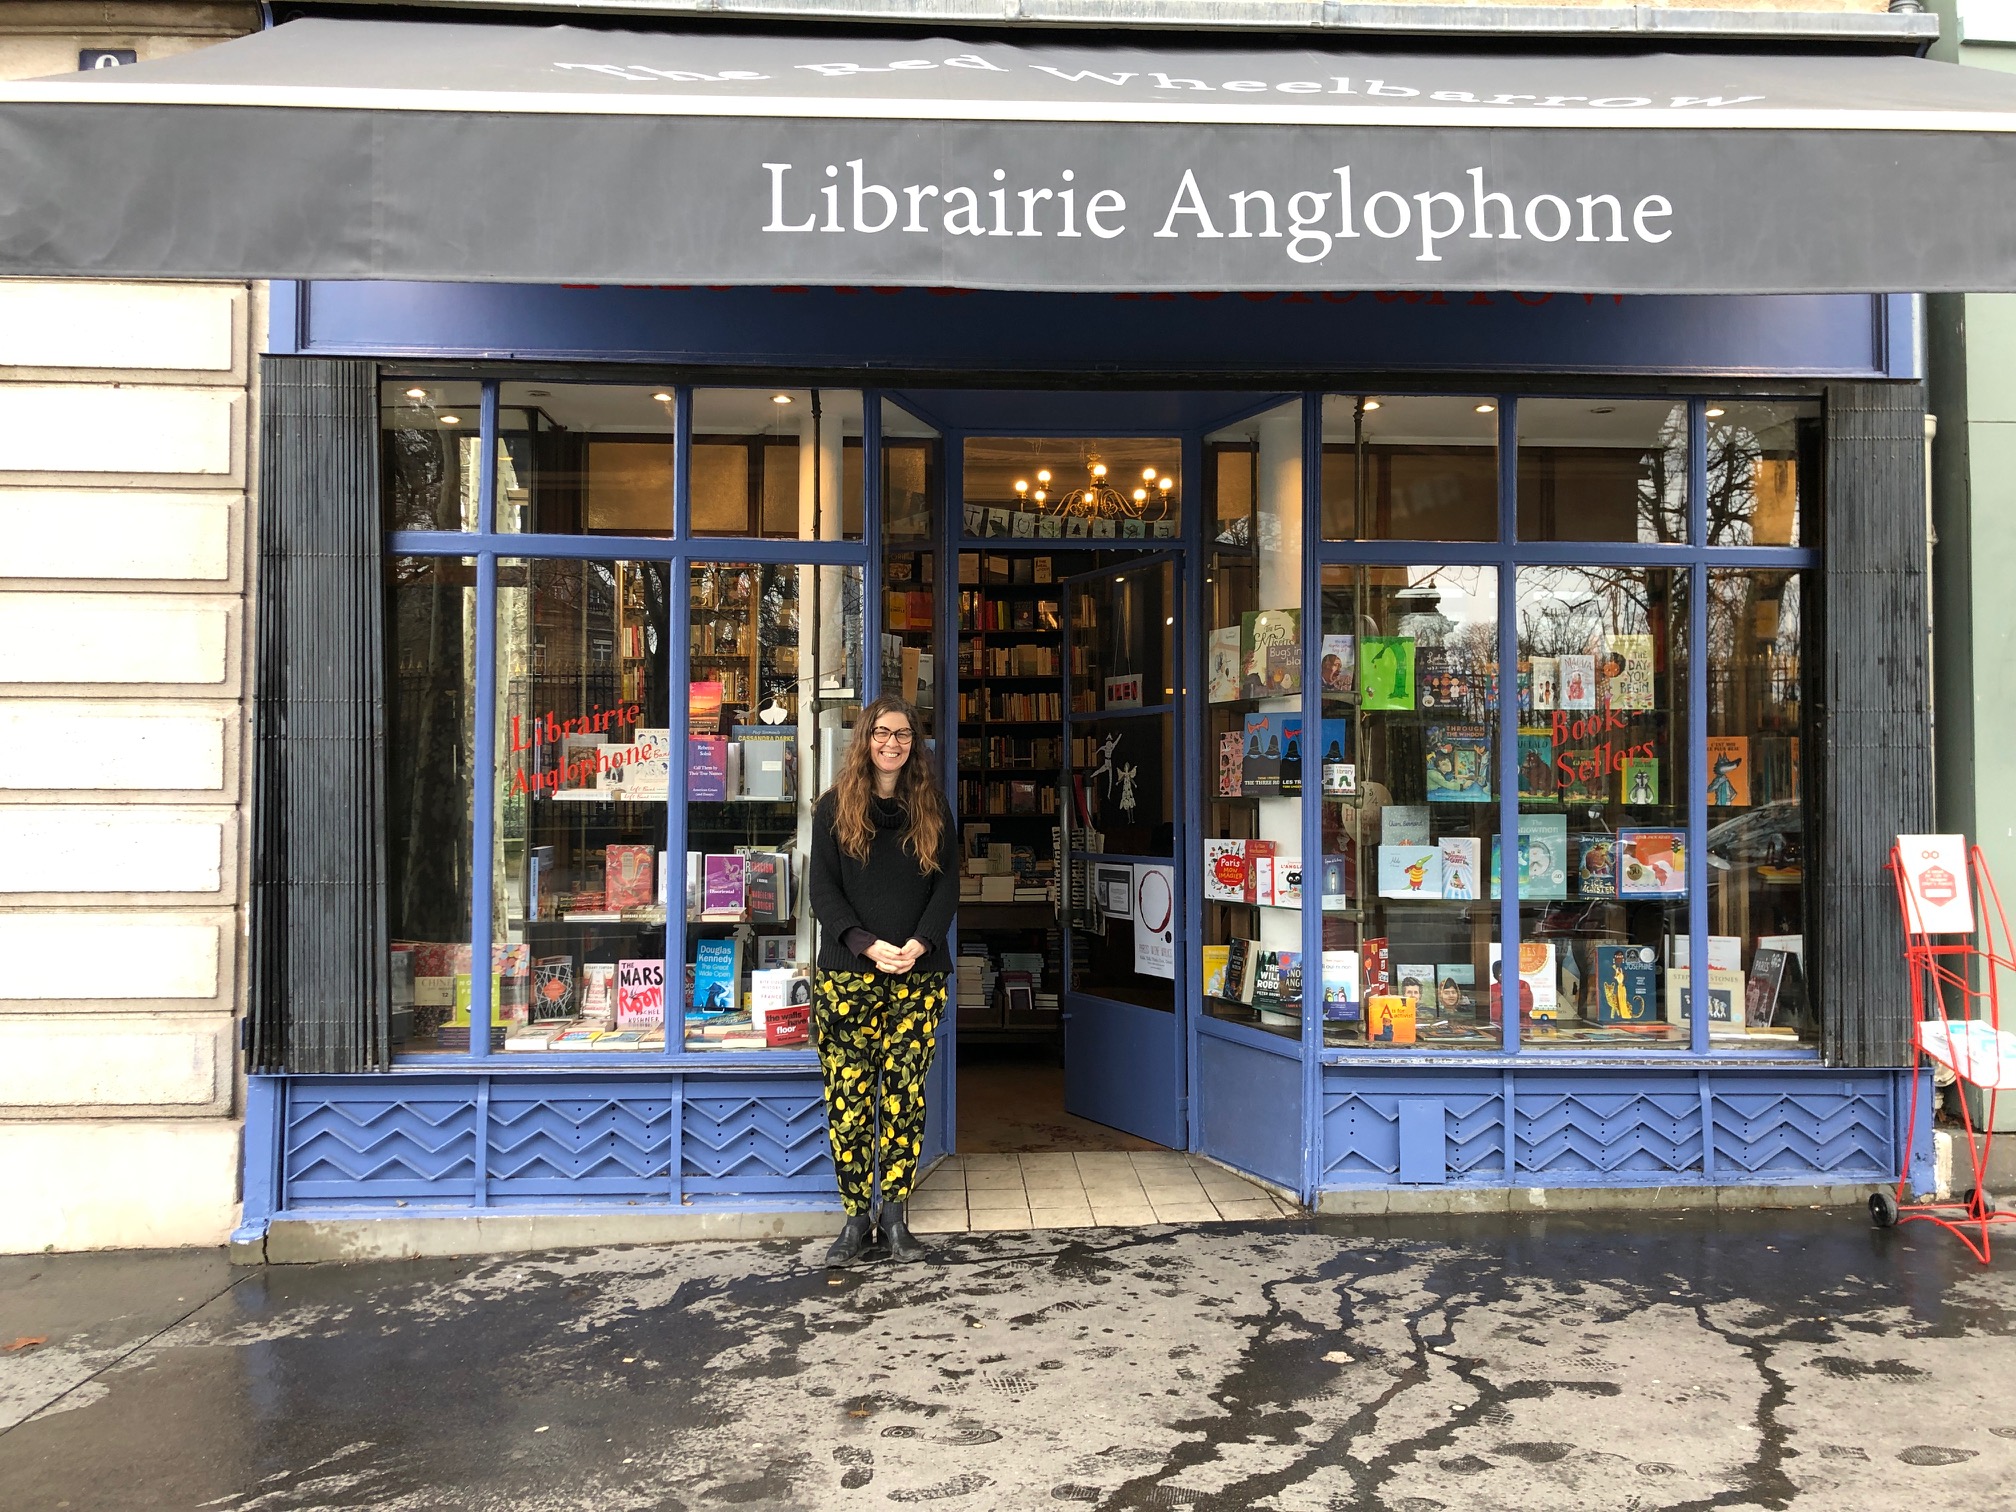 The Red Wheelbarrow Bookstore Shines in New Location